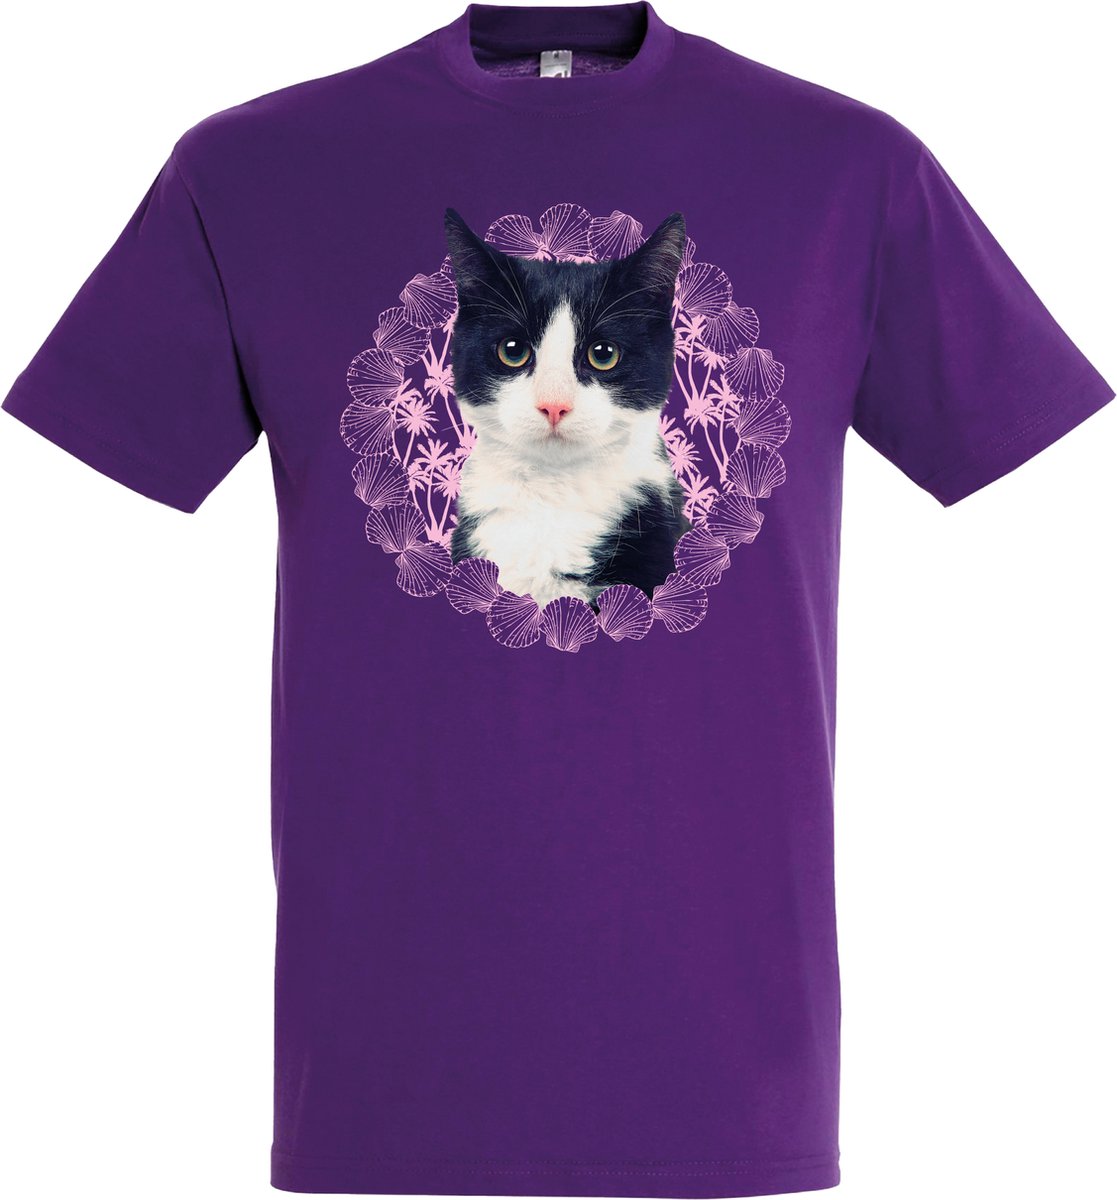 Plenty Gifts T-shirt Black & White Cat Dark Purple L